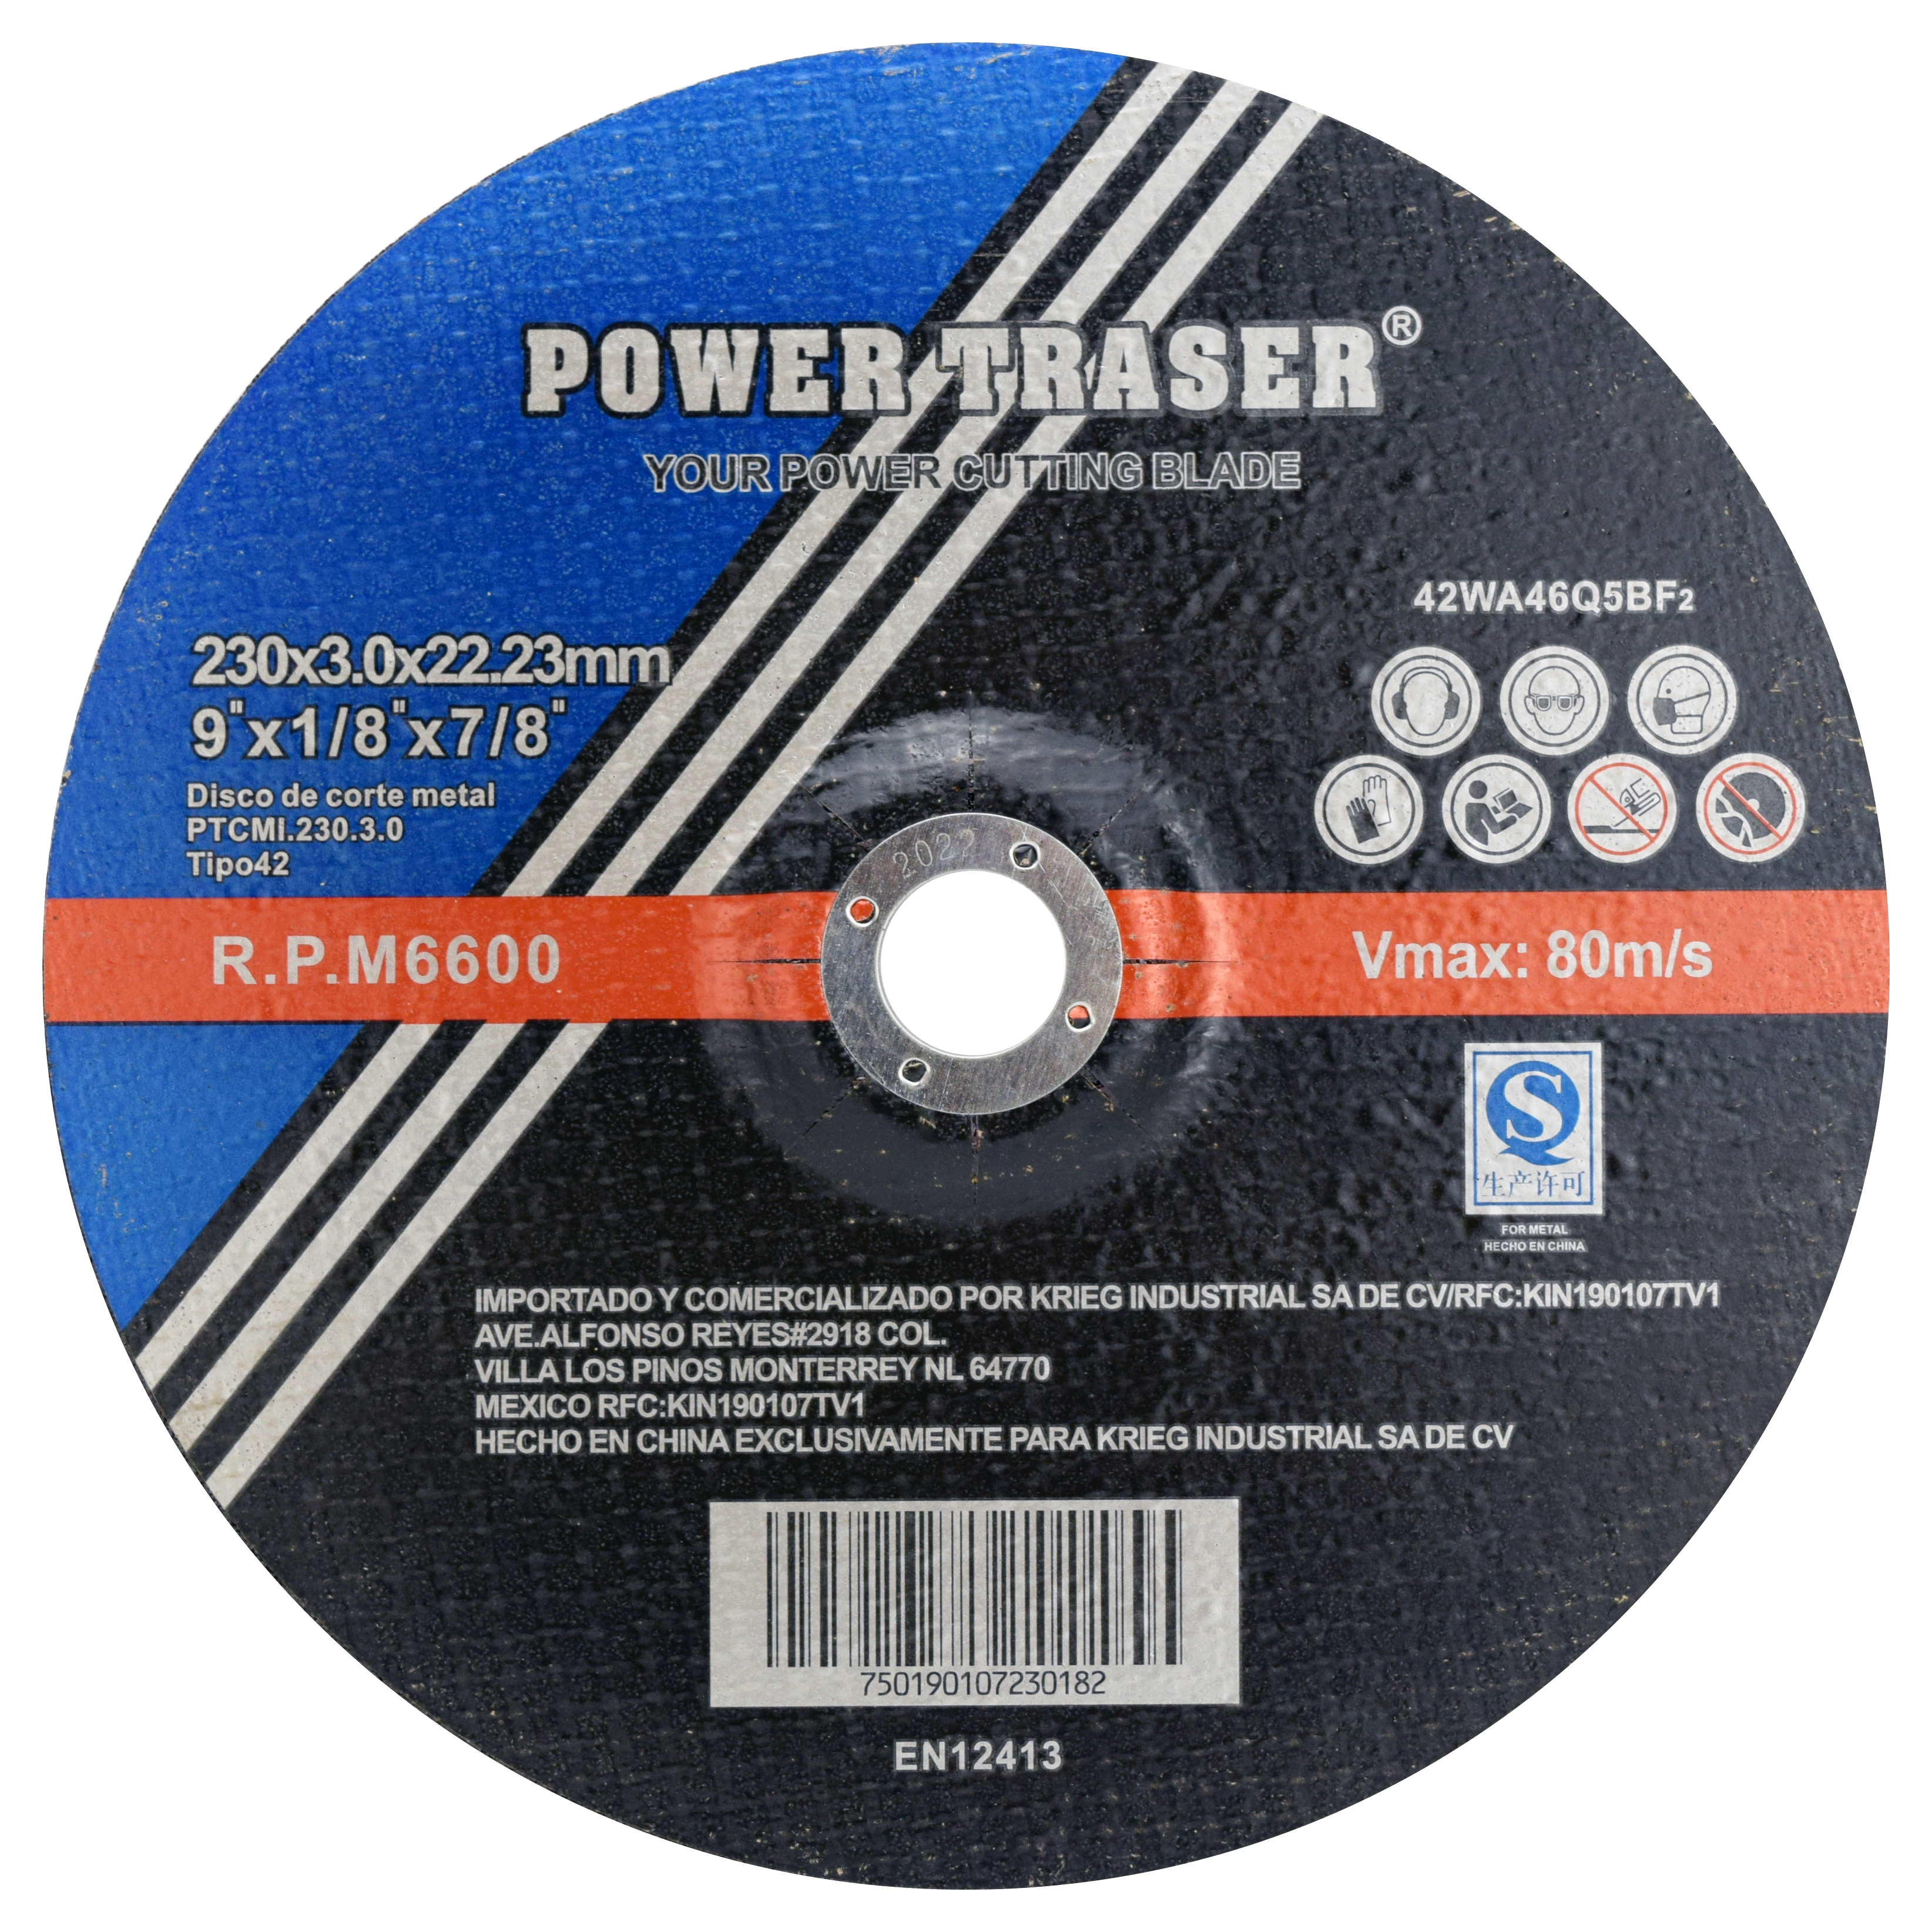 POWER TRASER MODELO DCP918B01